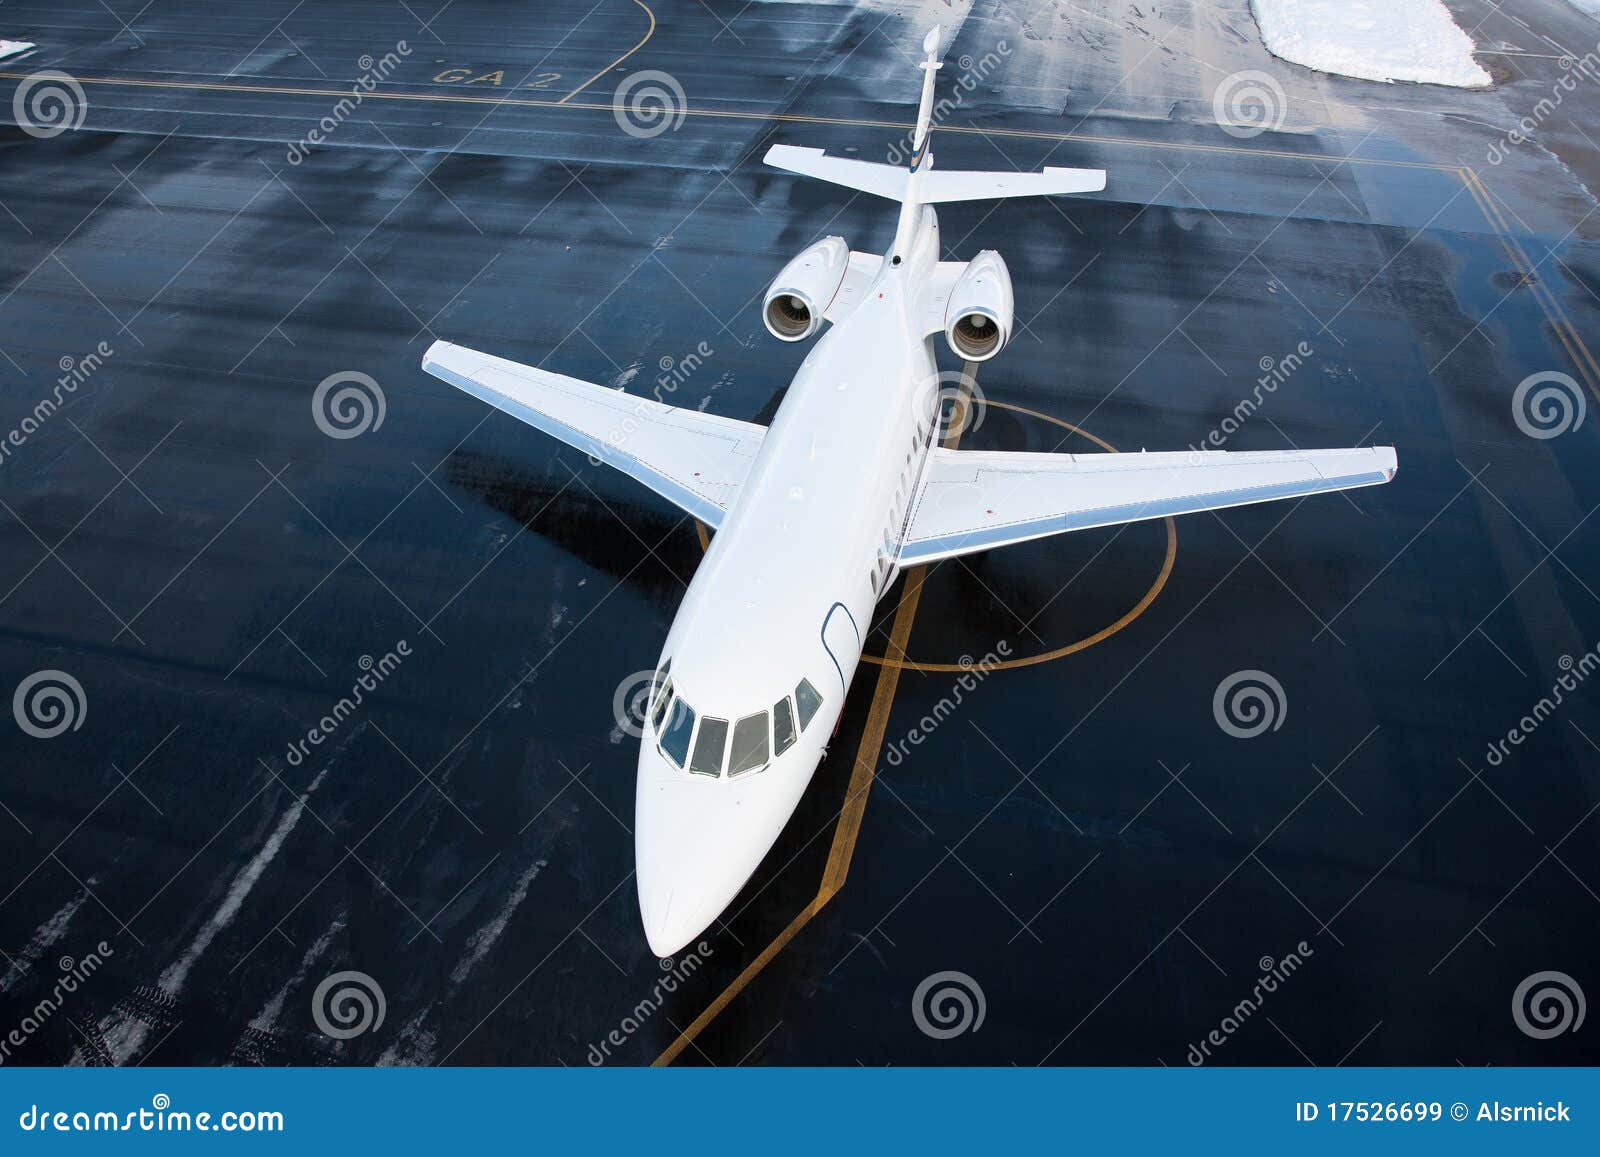 business jet